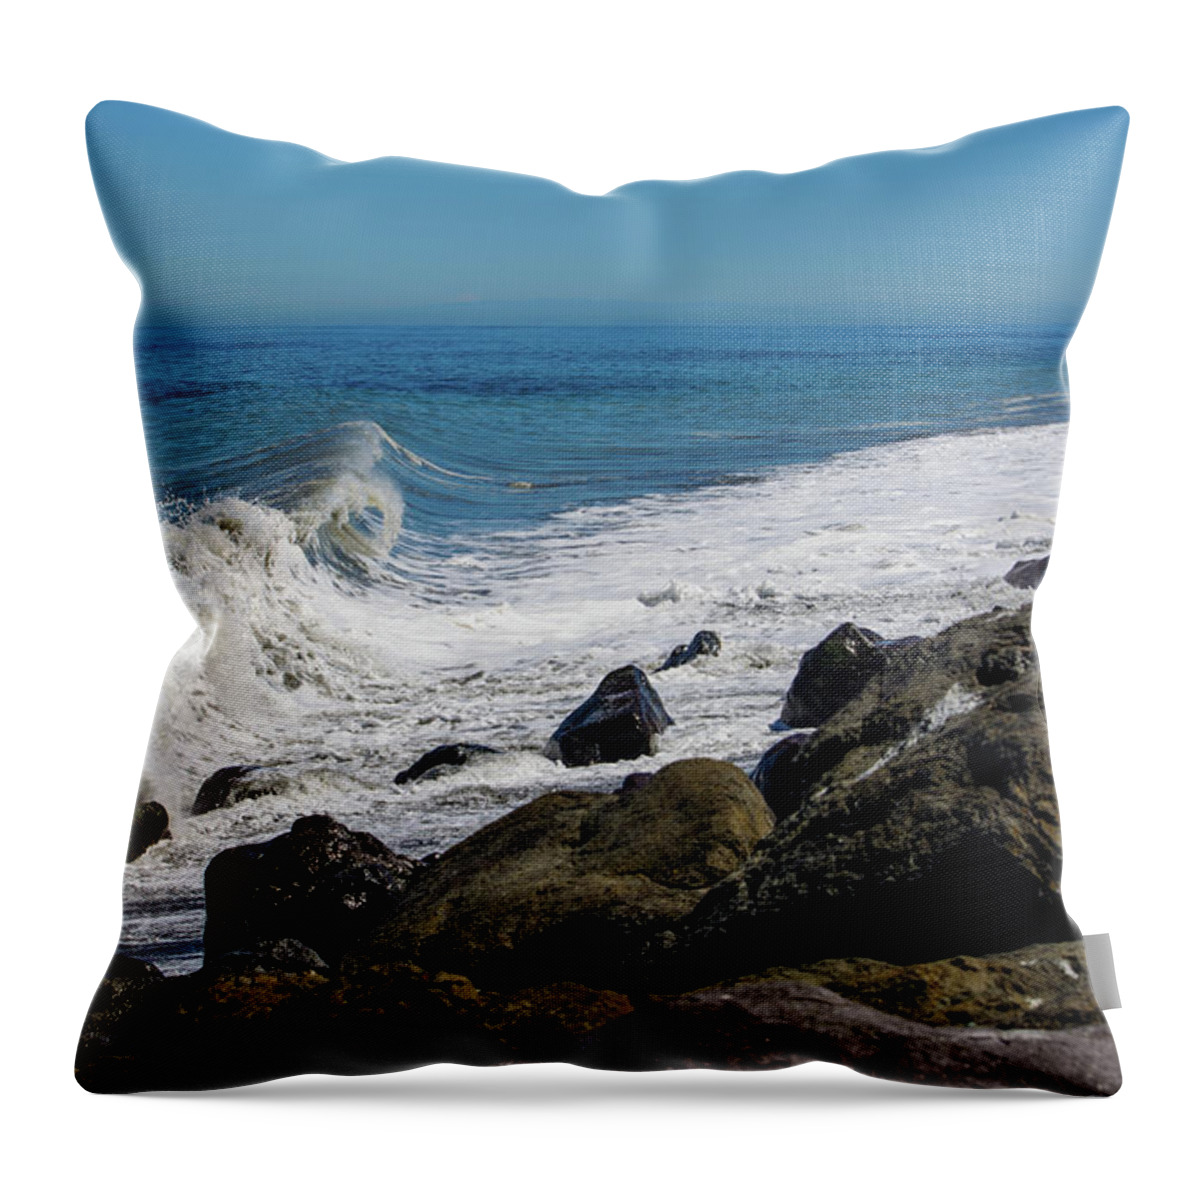 Ocean Throw Pillow featuring the photograph Strait of Juan de Fuca by Tikvah's Hope